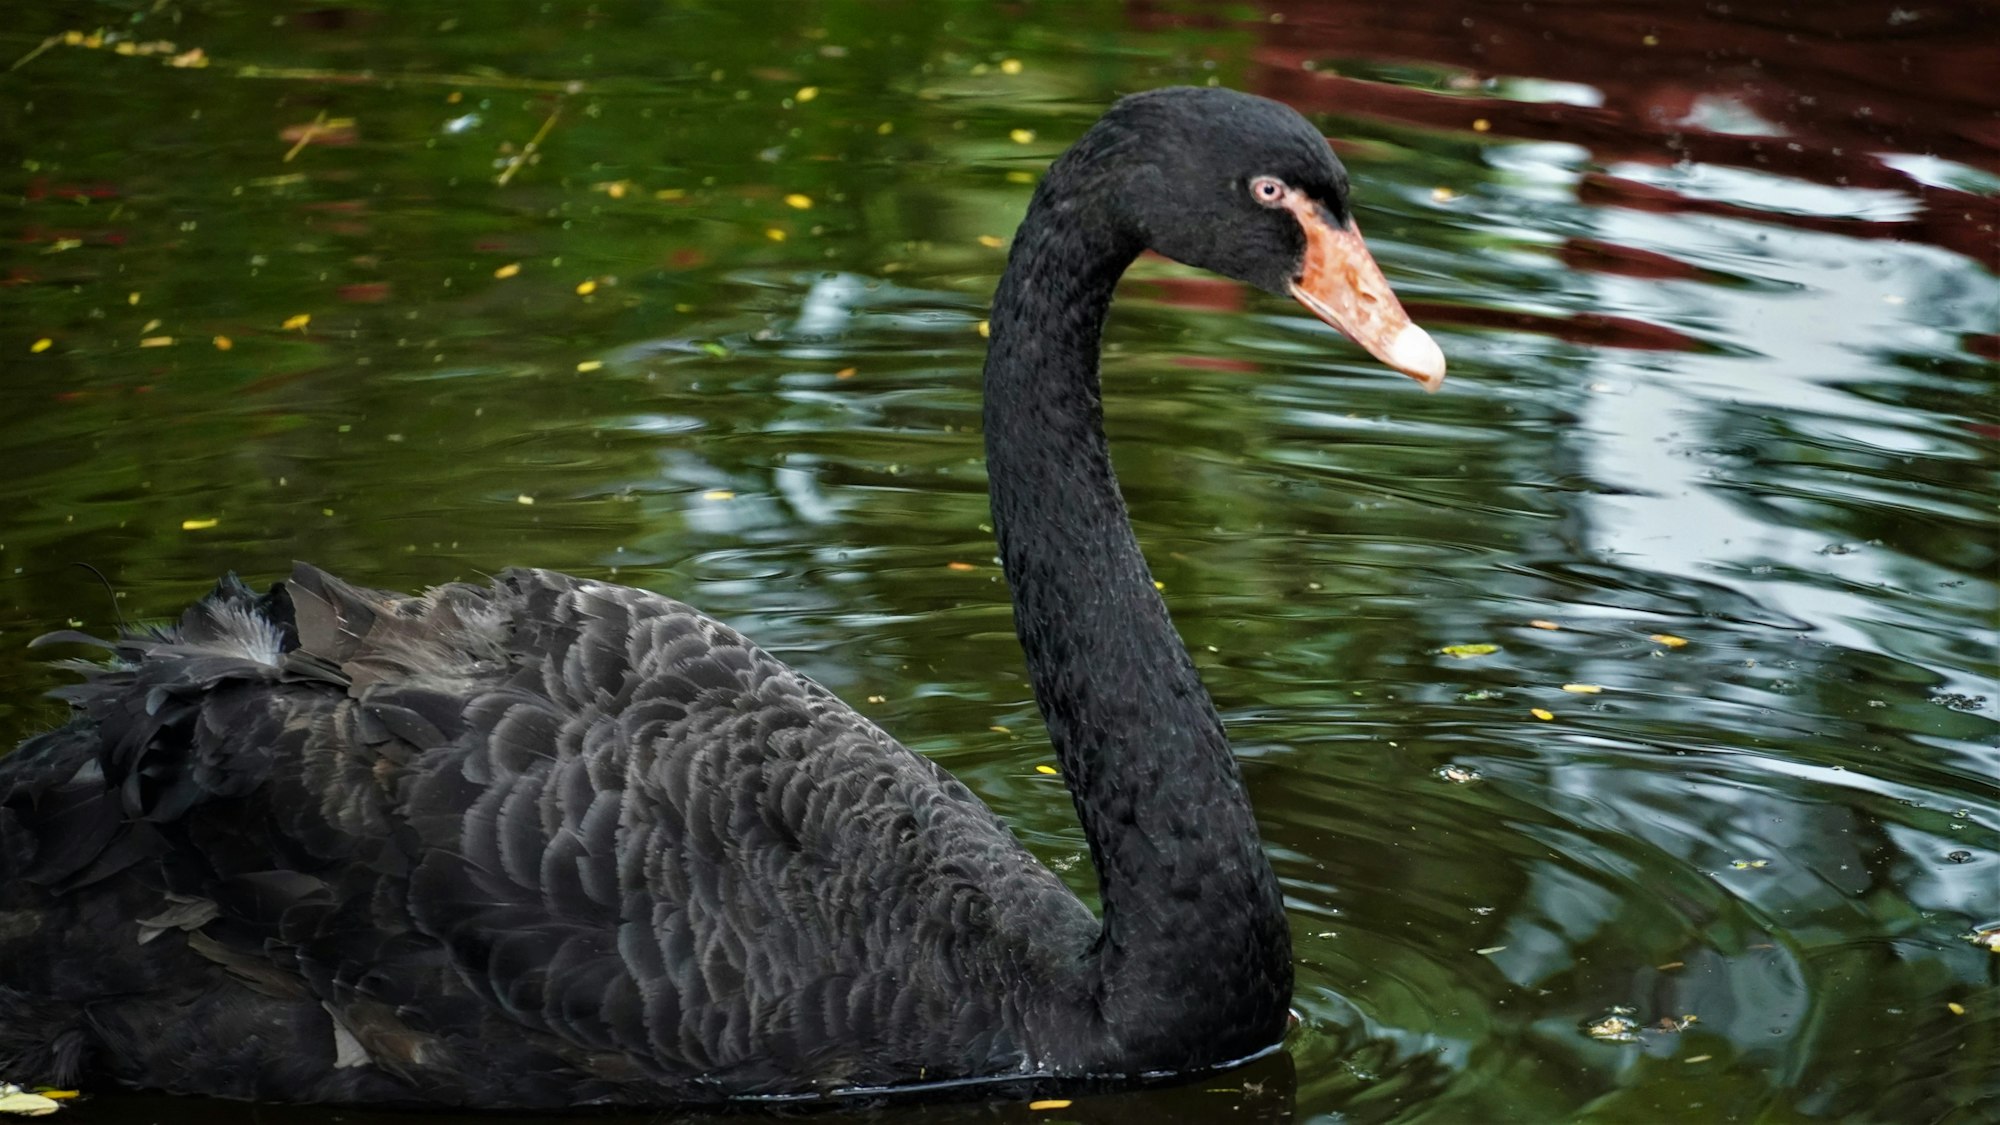 Jolly Swim..... #Black Swan
Photography By Yuvraj Yadav